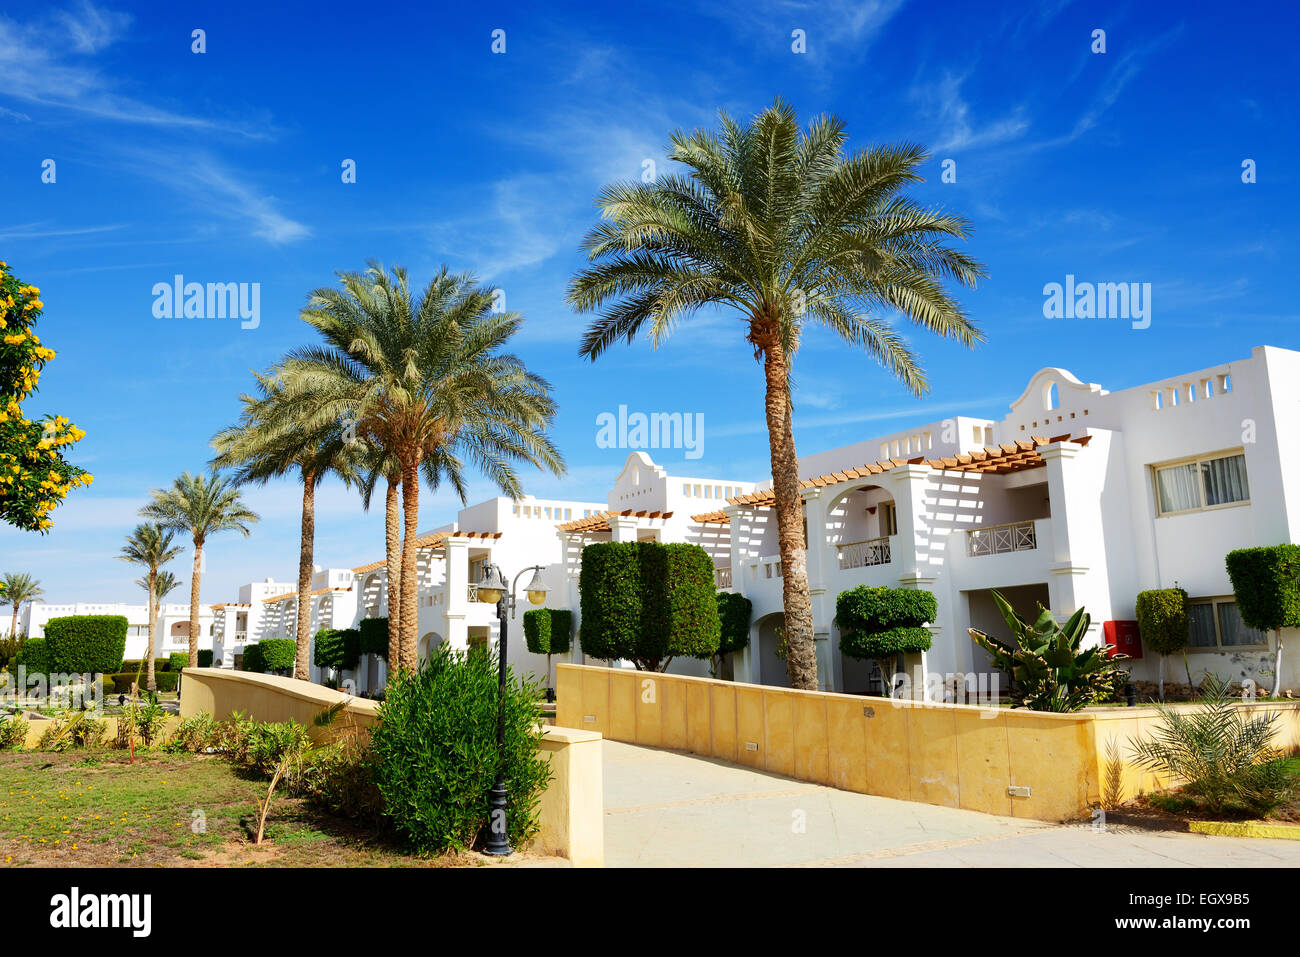 The holiday villas at luxury hotel, Sharm el Sheikh, Egypt Stock Photo